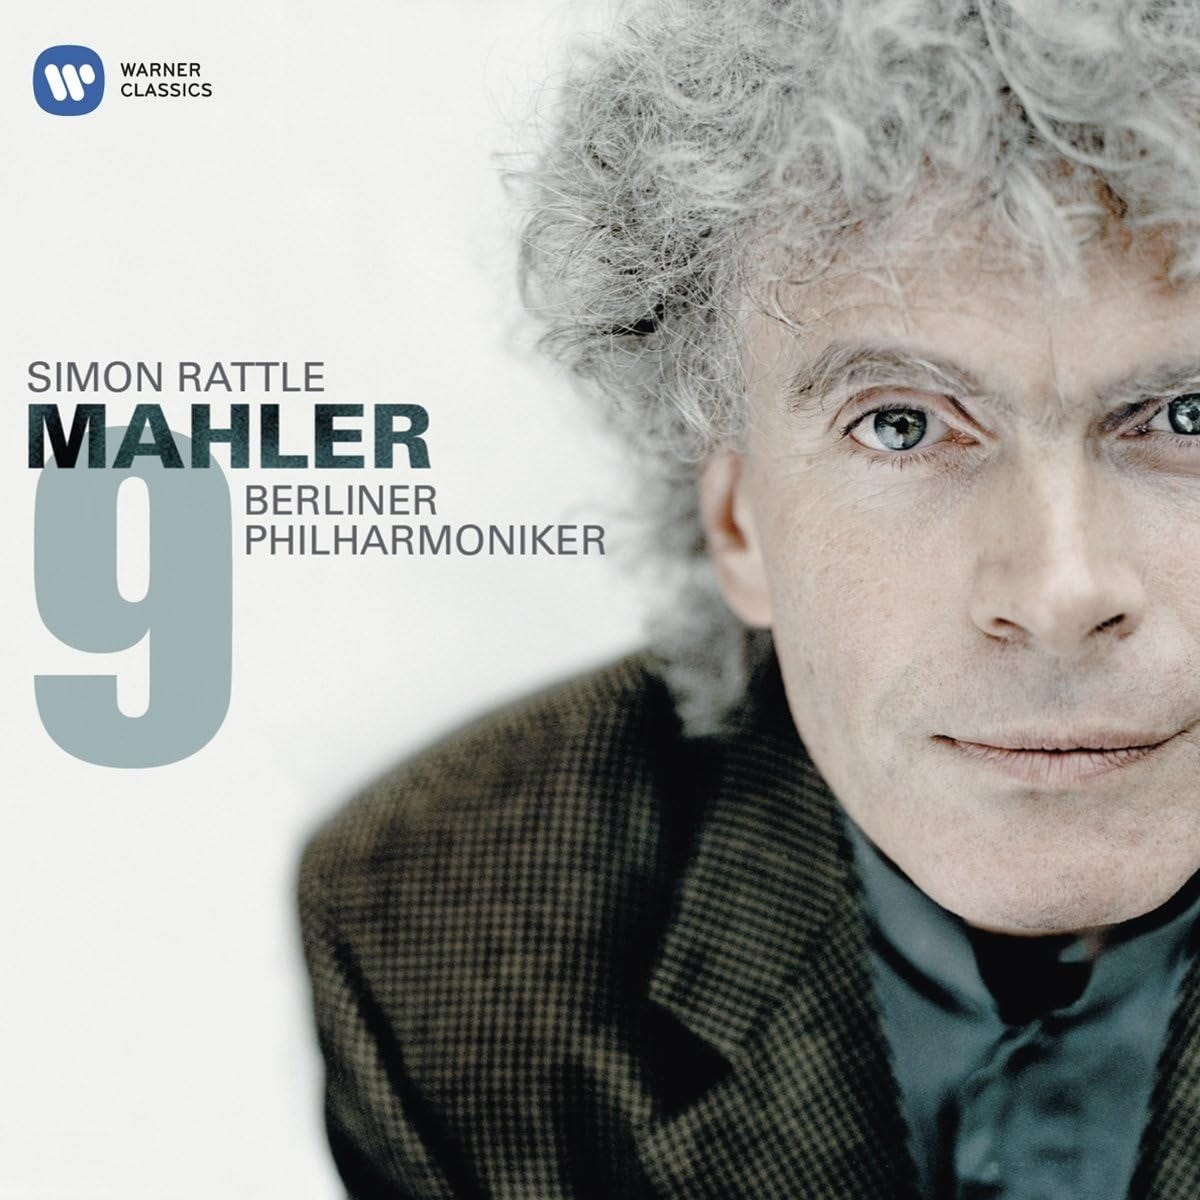 Symphony No 9 - Gustav Mahler, Simon Rattle, Berlin Philharmonic Orchestra